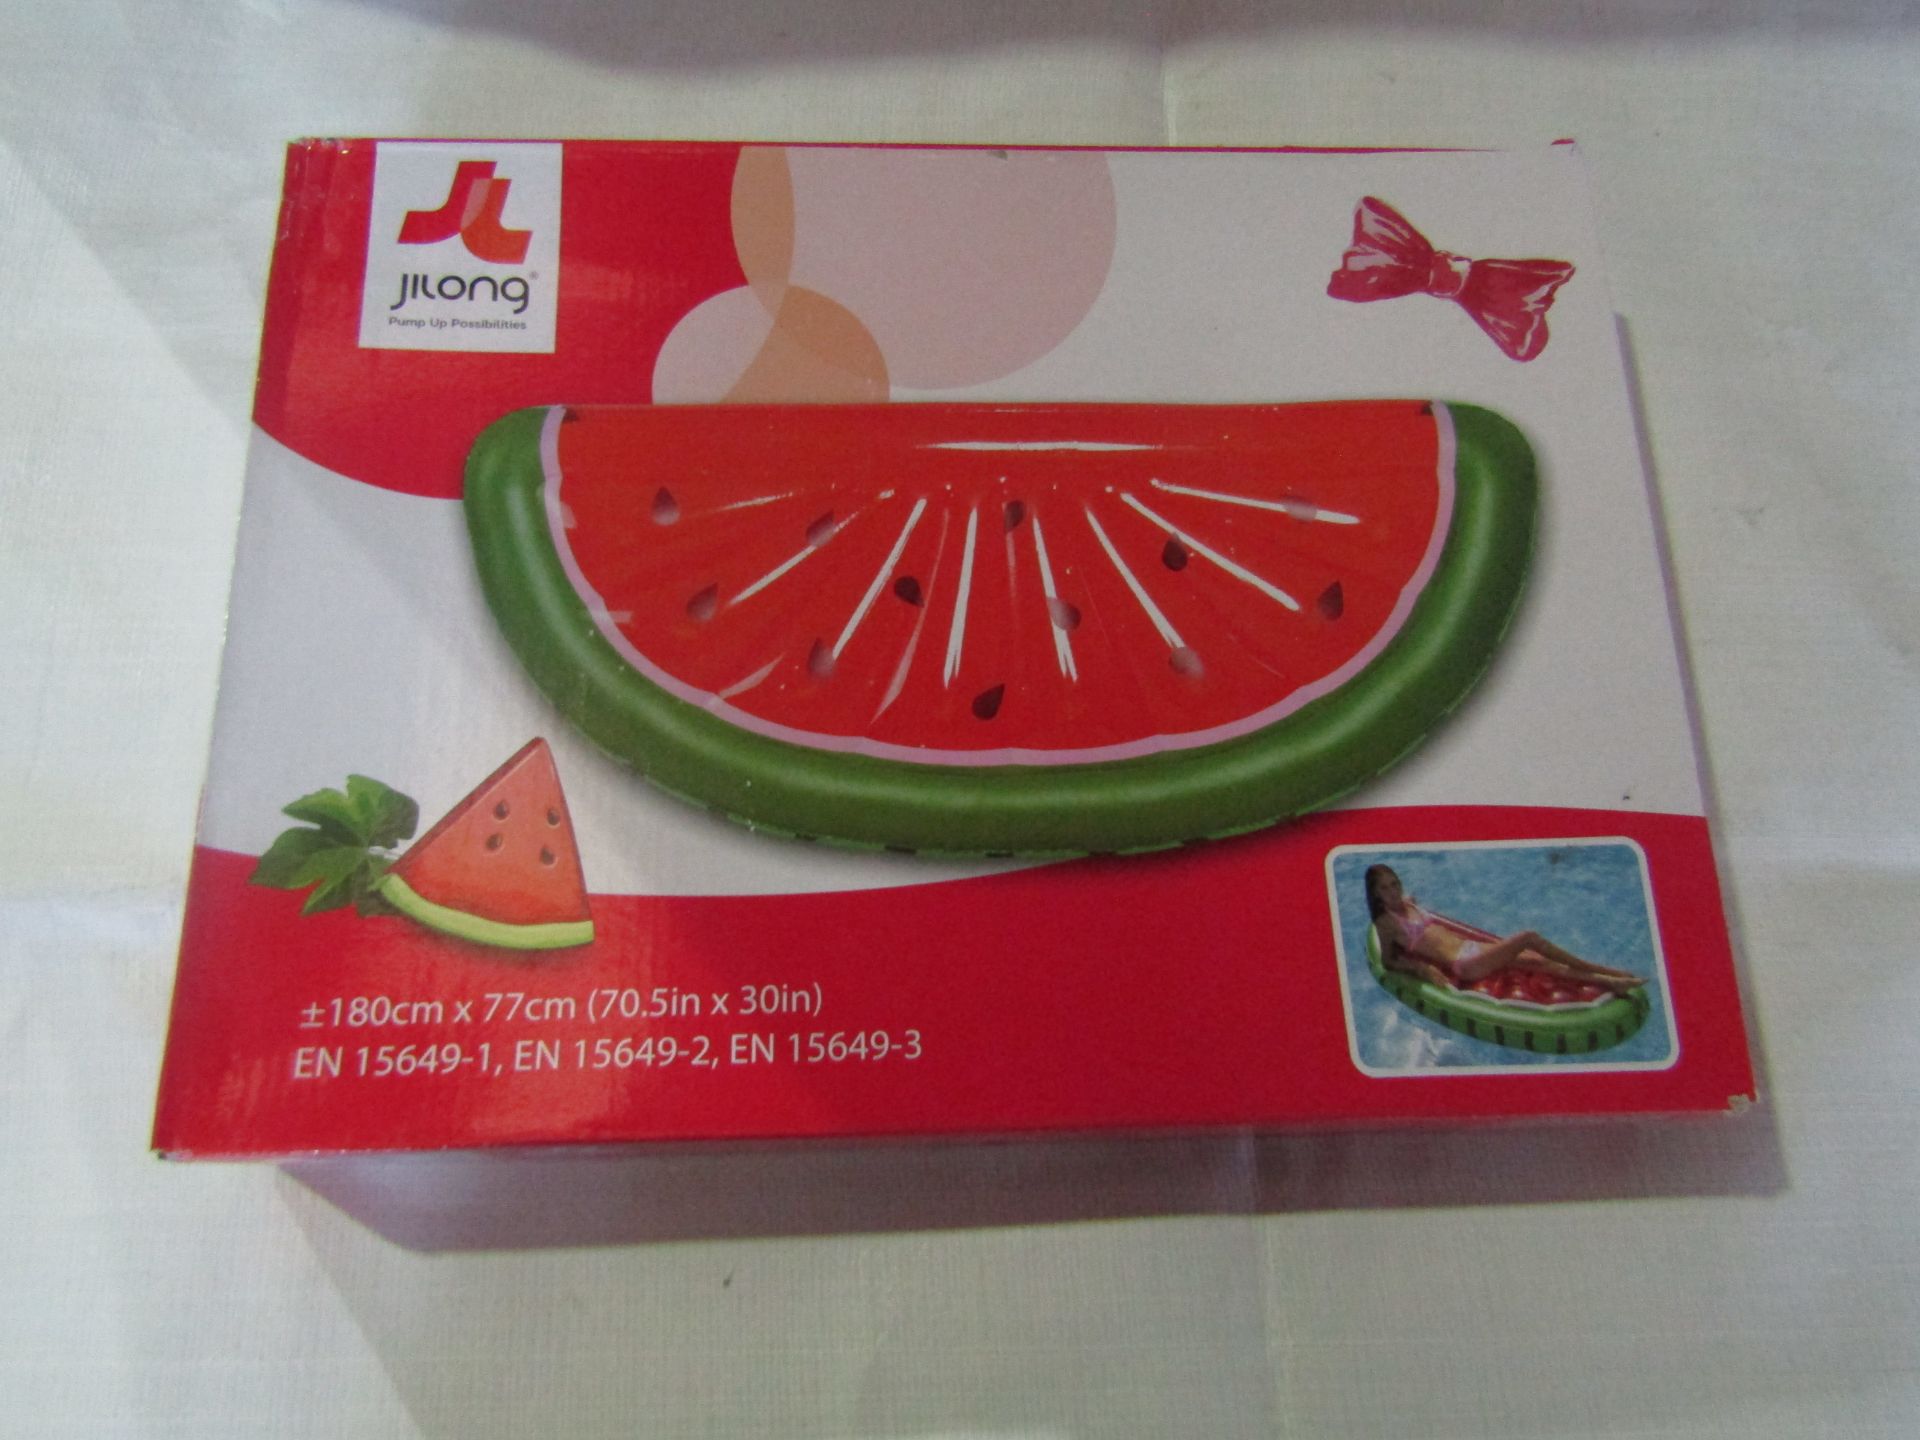 Jilong Pool Inflatable Jumbo Watermelon Slice Mattress, Size: 180x77cm - Unchecked & Boxed.